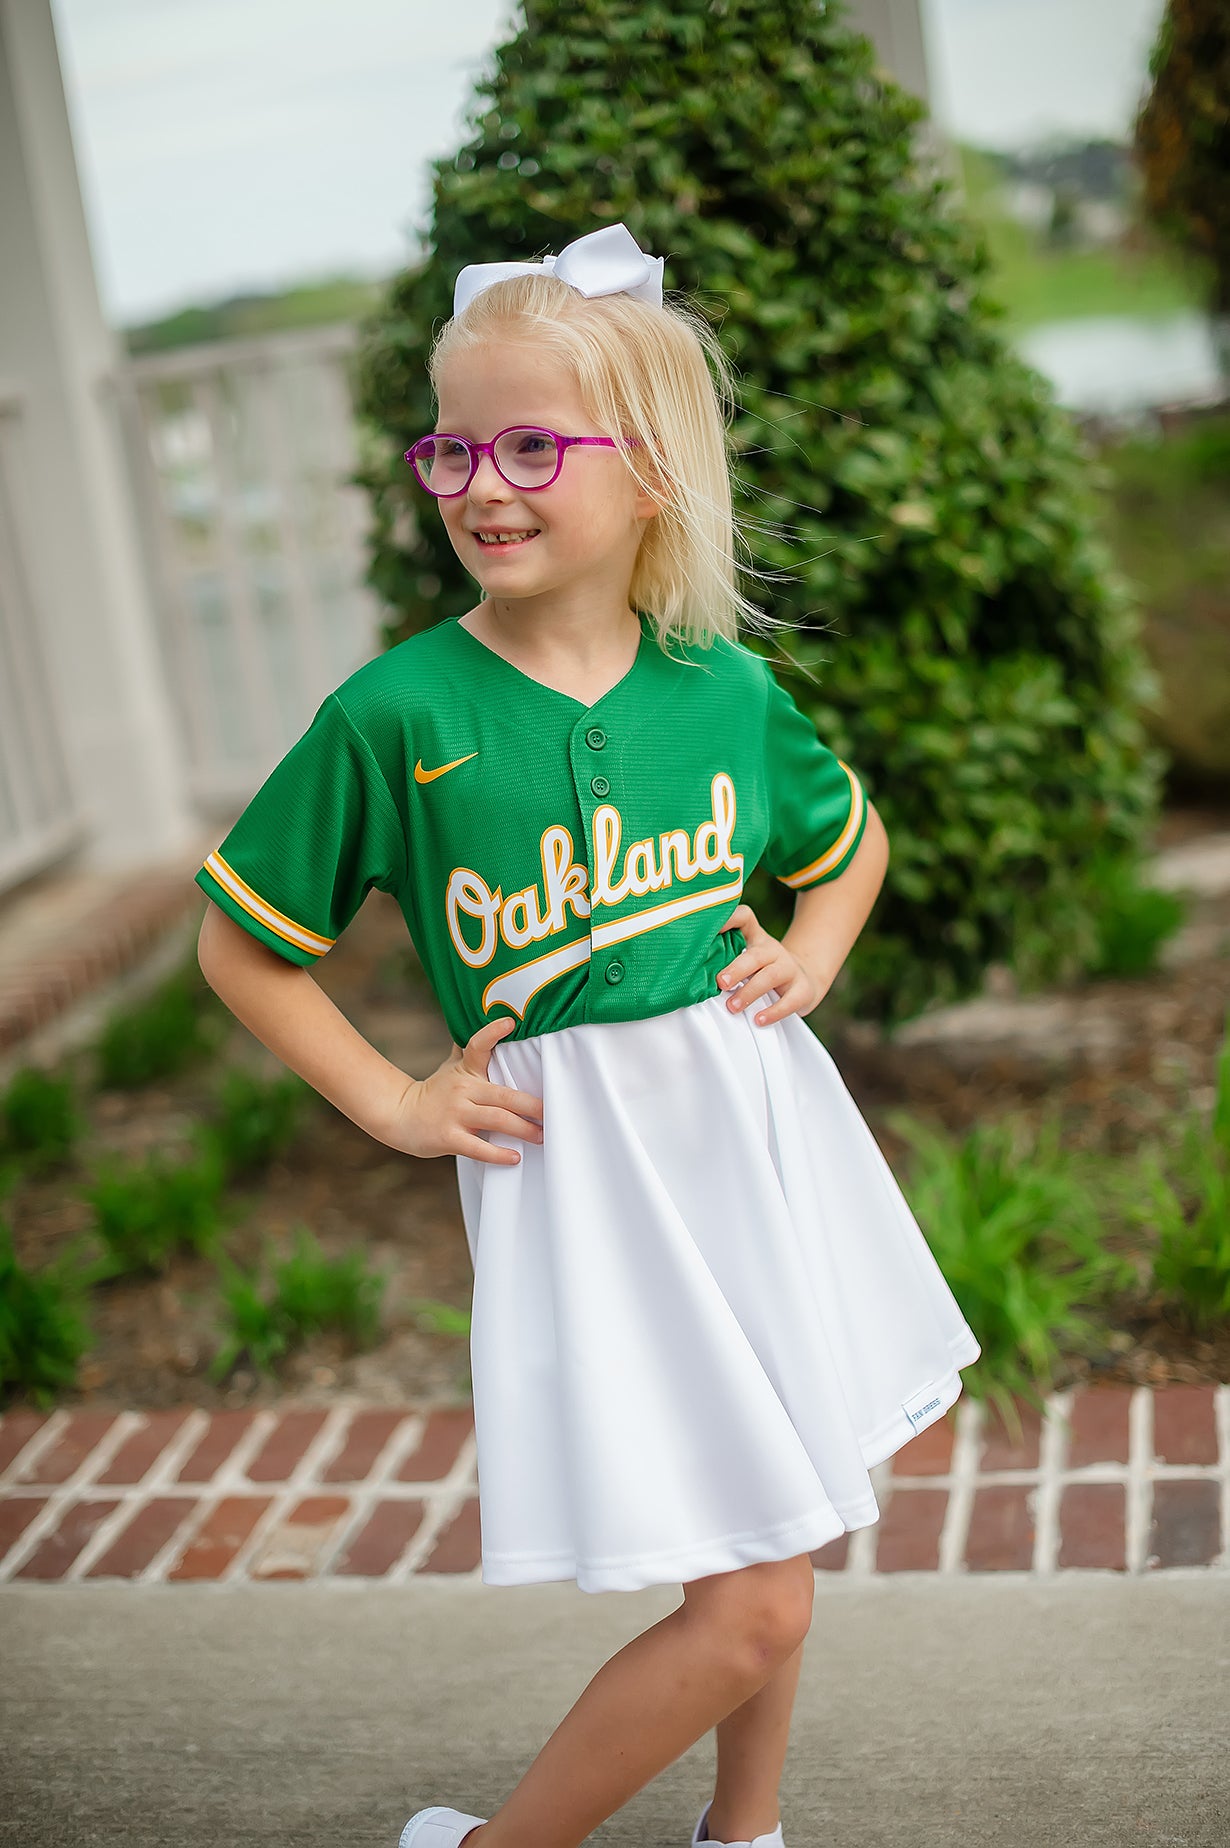 Official Oakland Athletics Polos, A's Golf Shirts, Dress